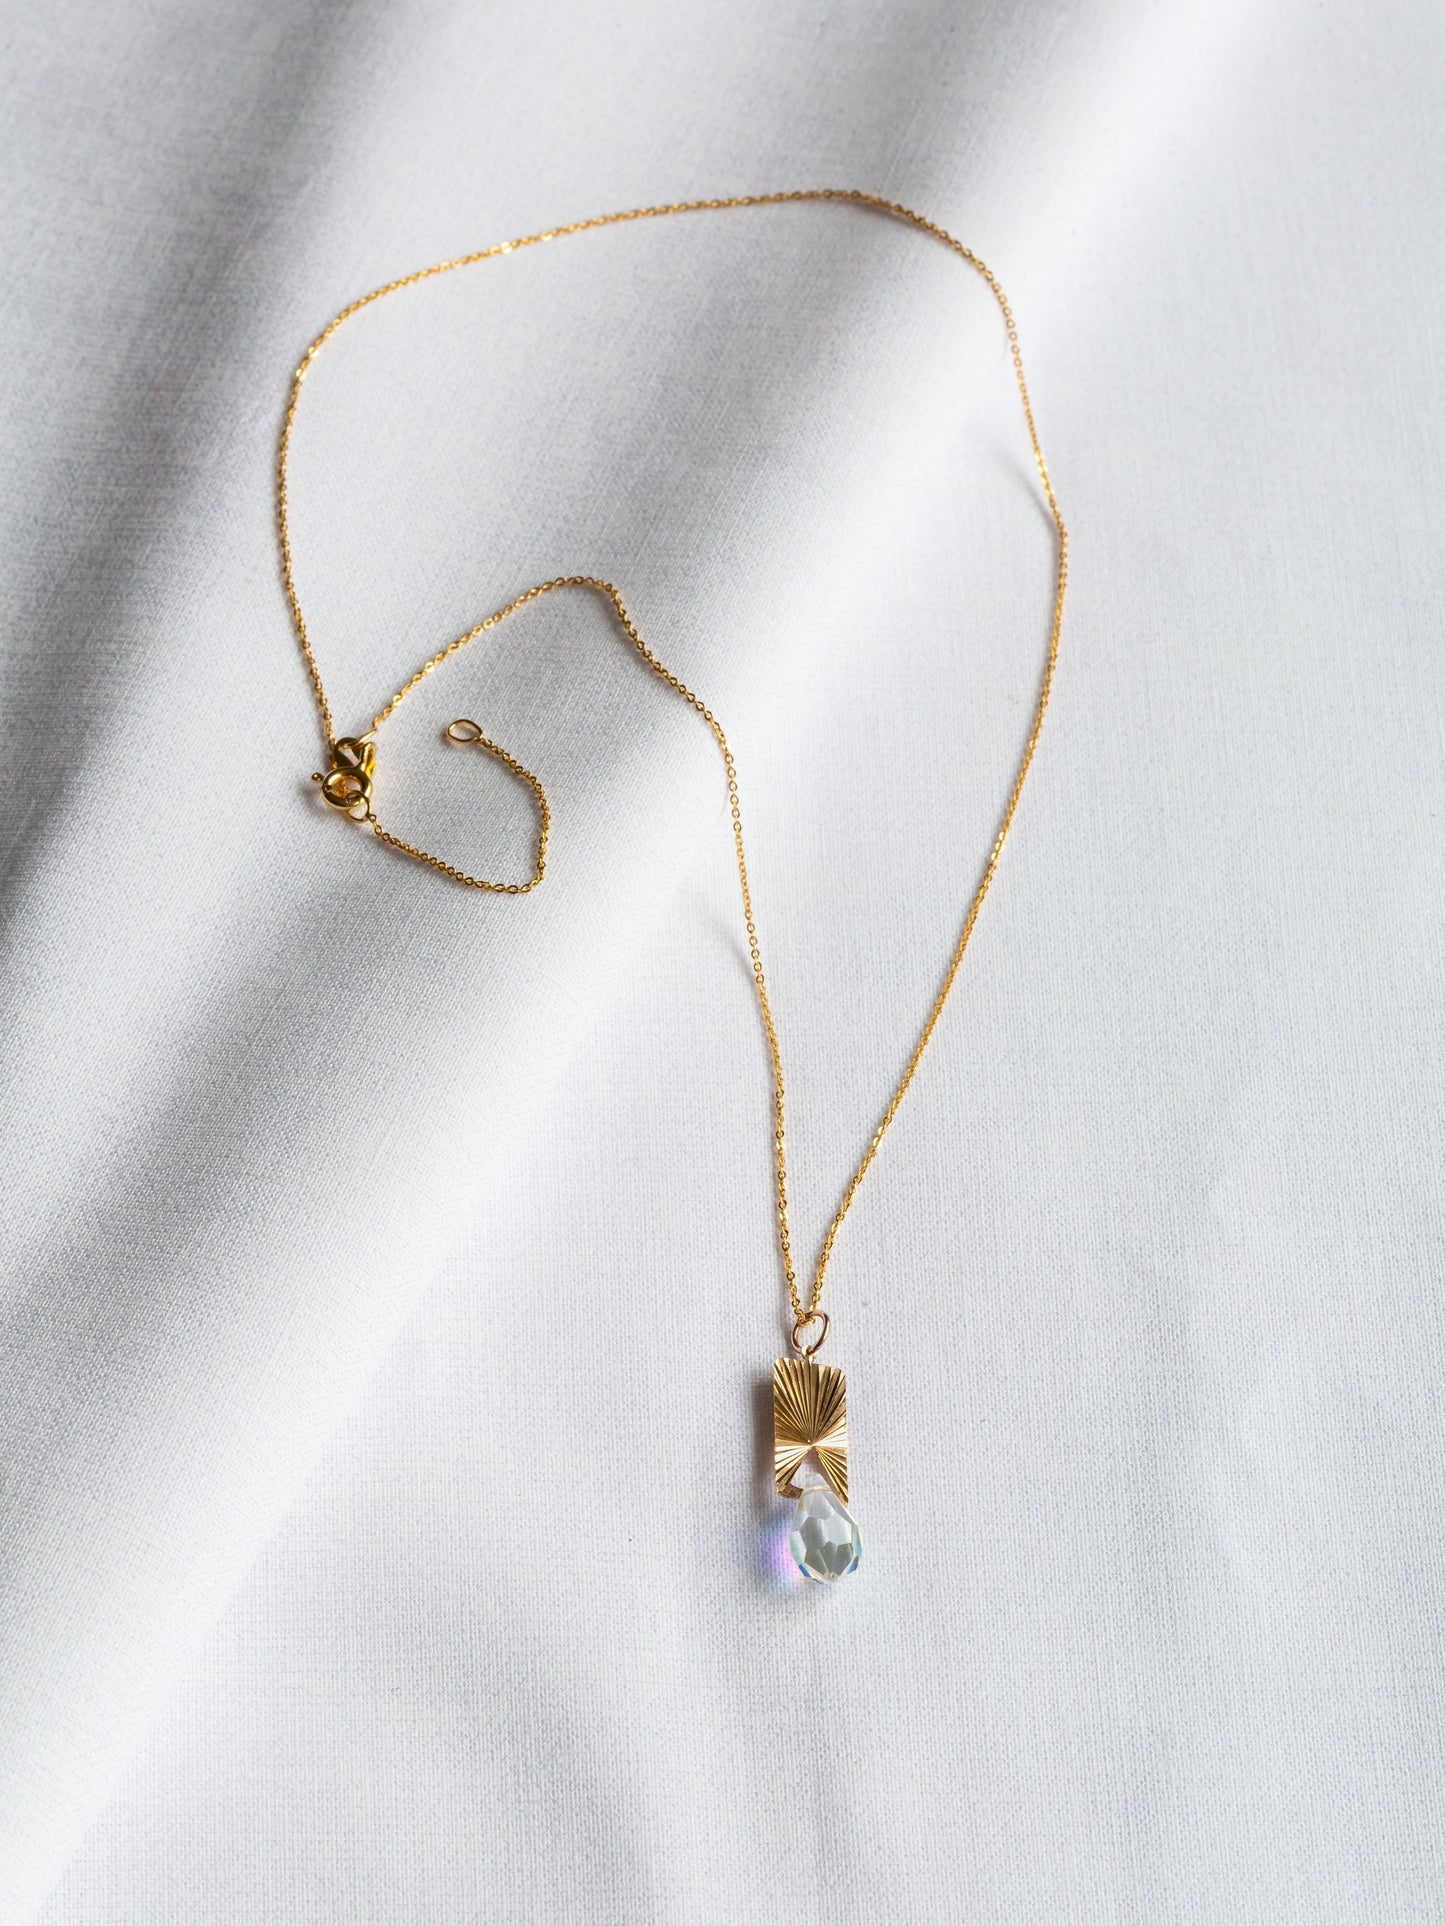 Vintage 9ct Gold Crystal Drop Pendant Necklace